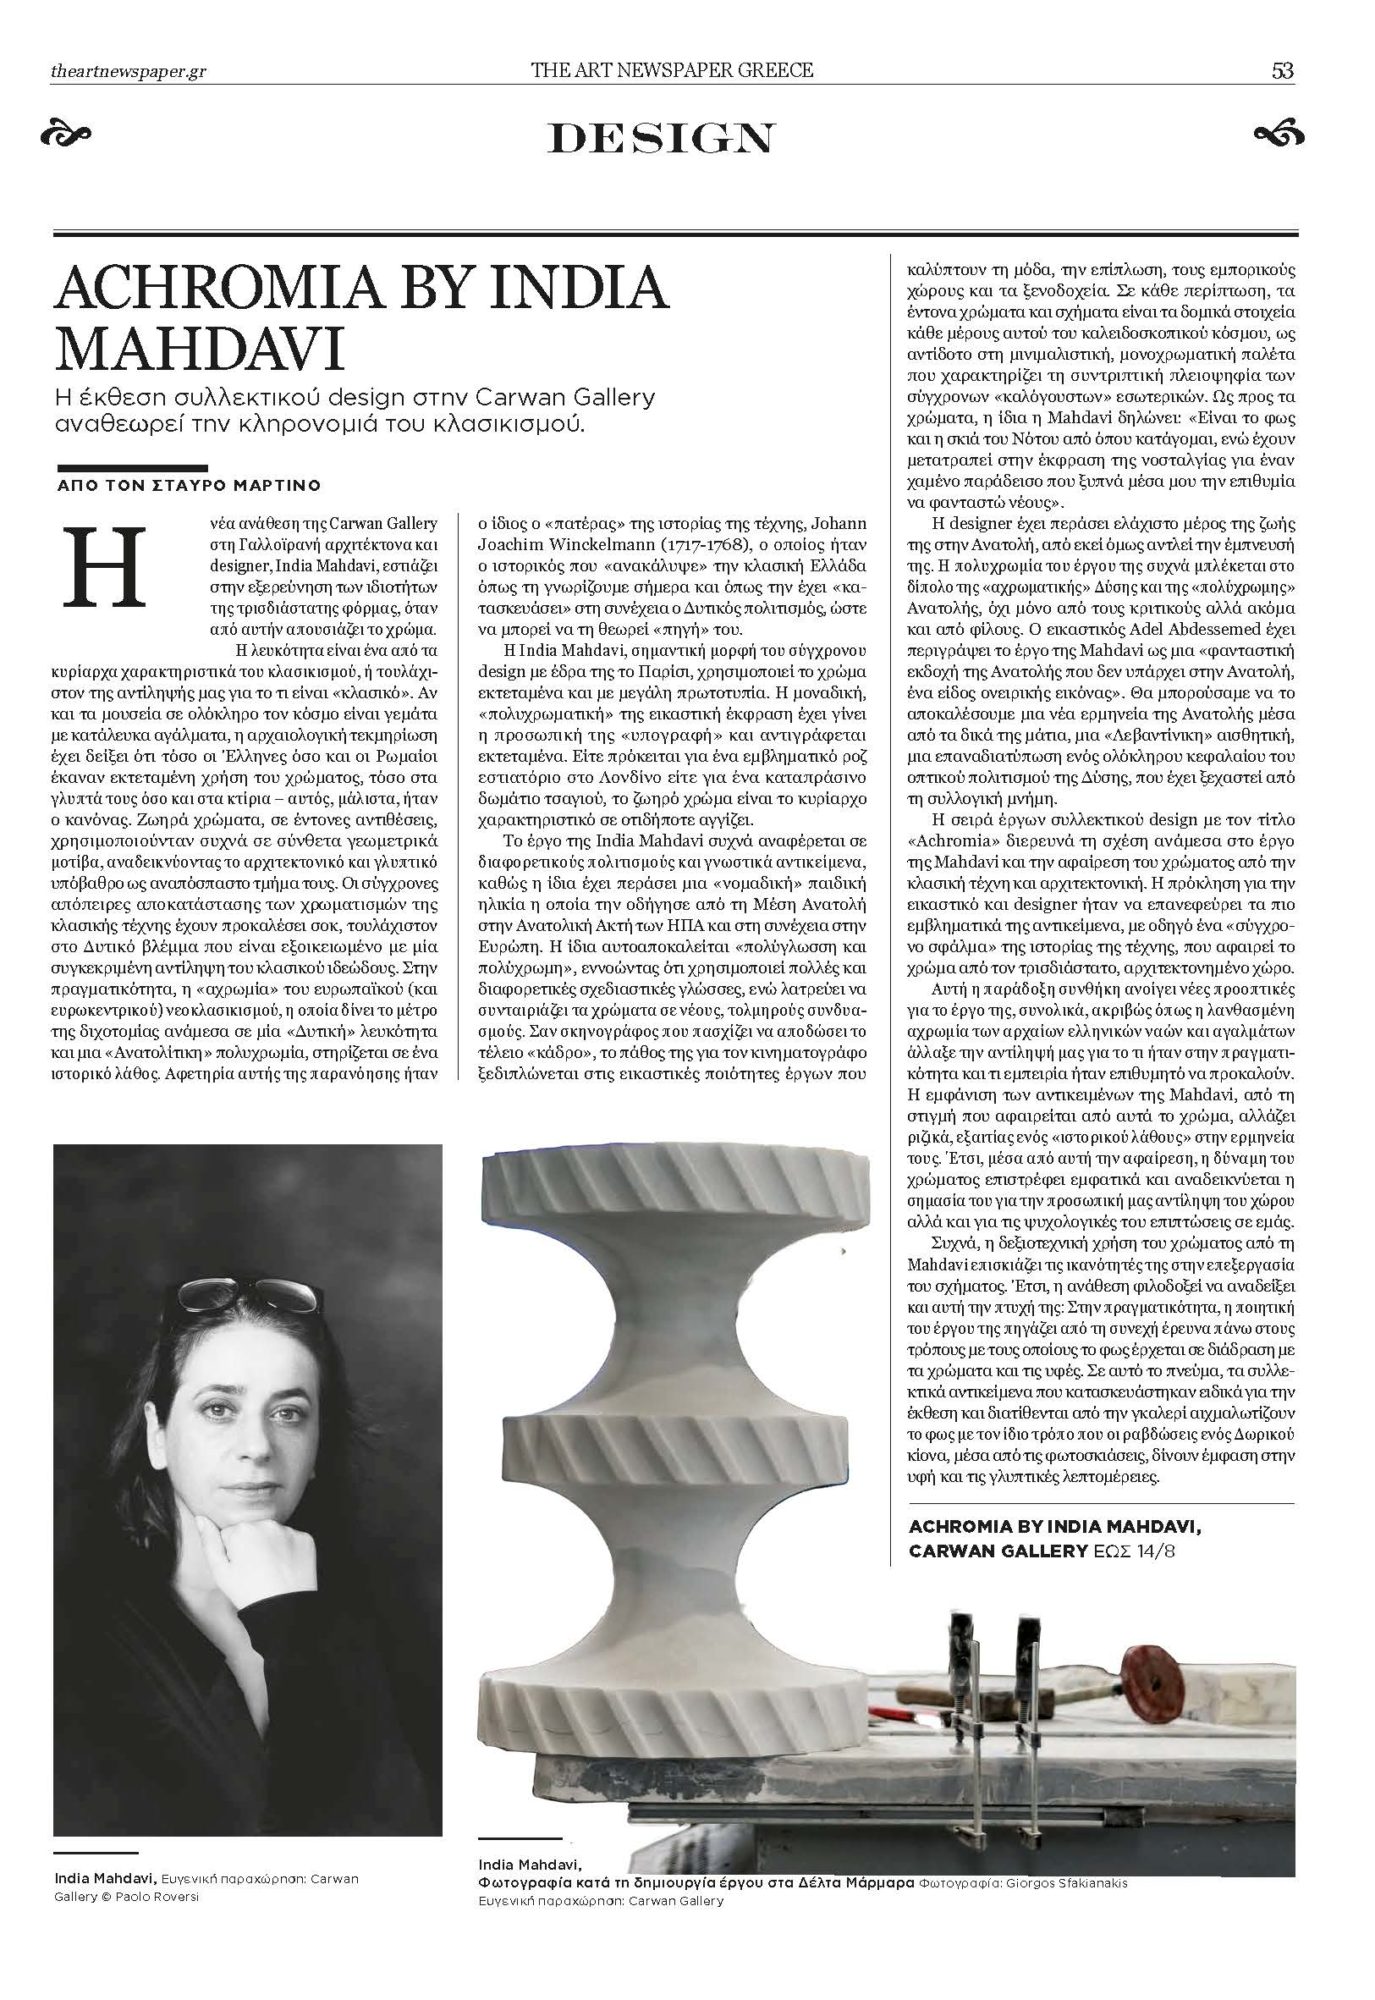 The Art Newspaper - India Mahdavi